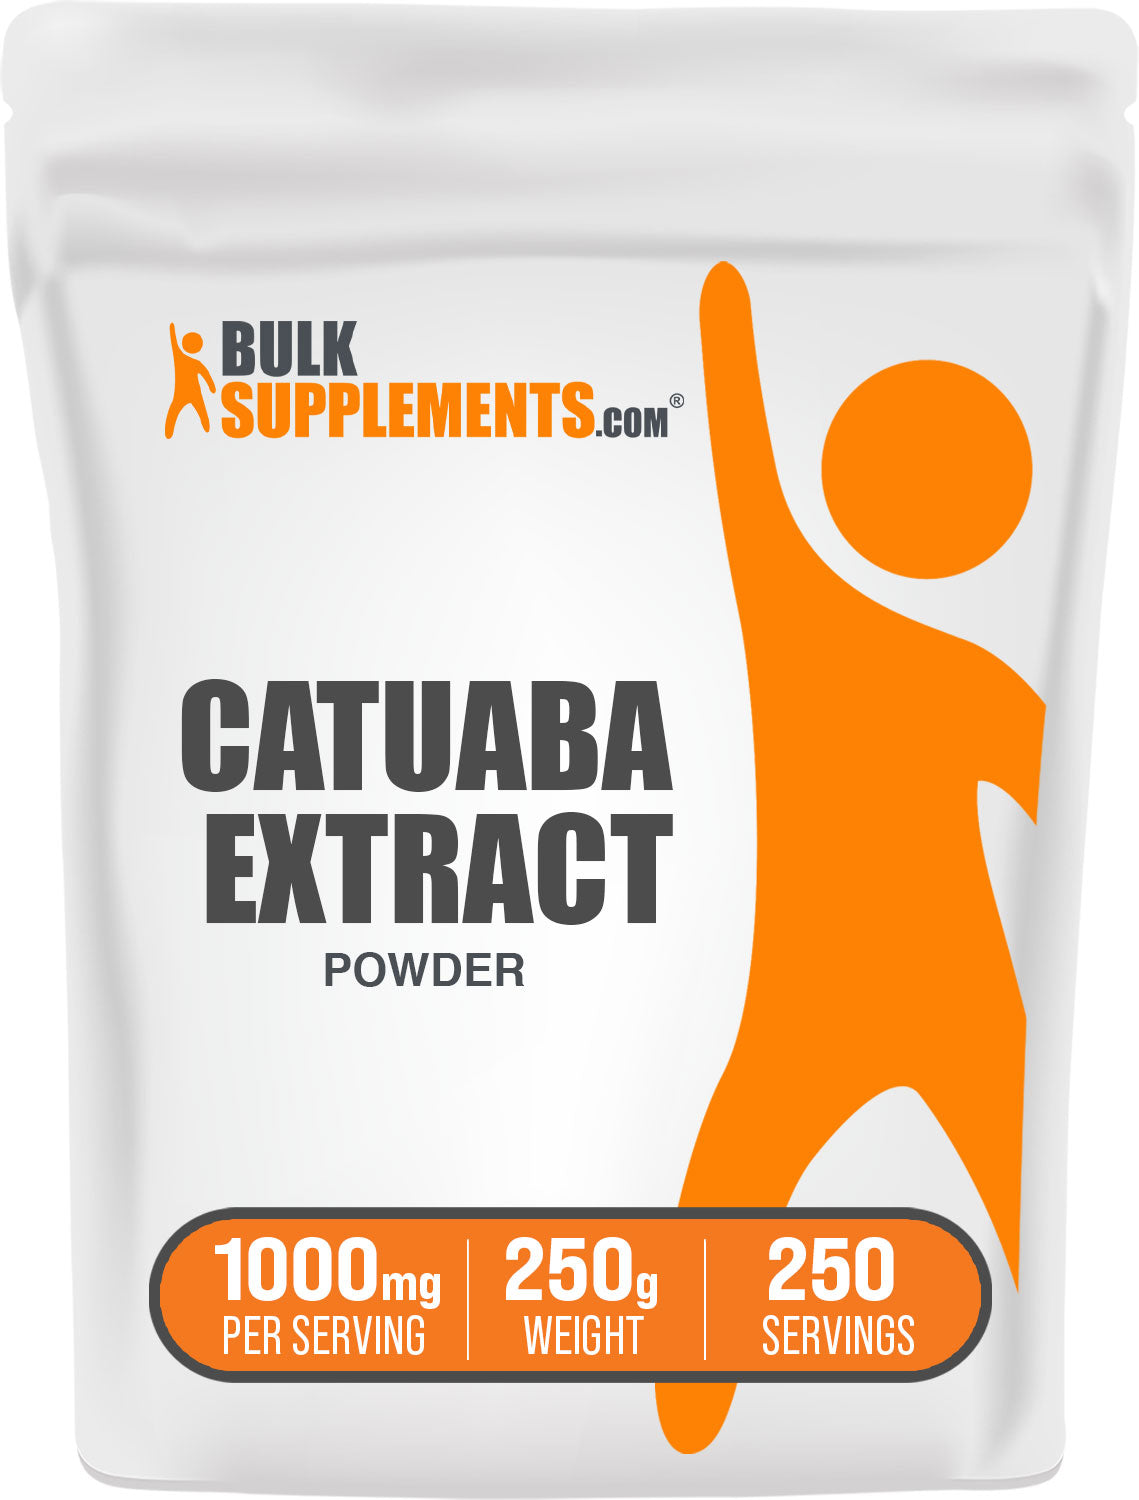 250g of Catuaba Extract